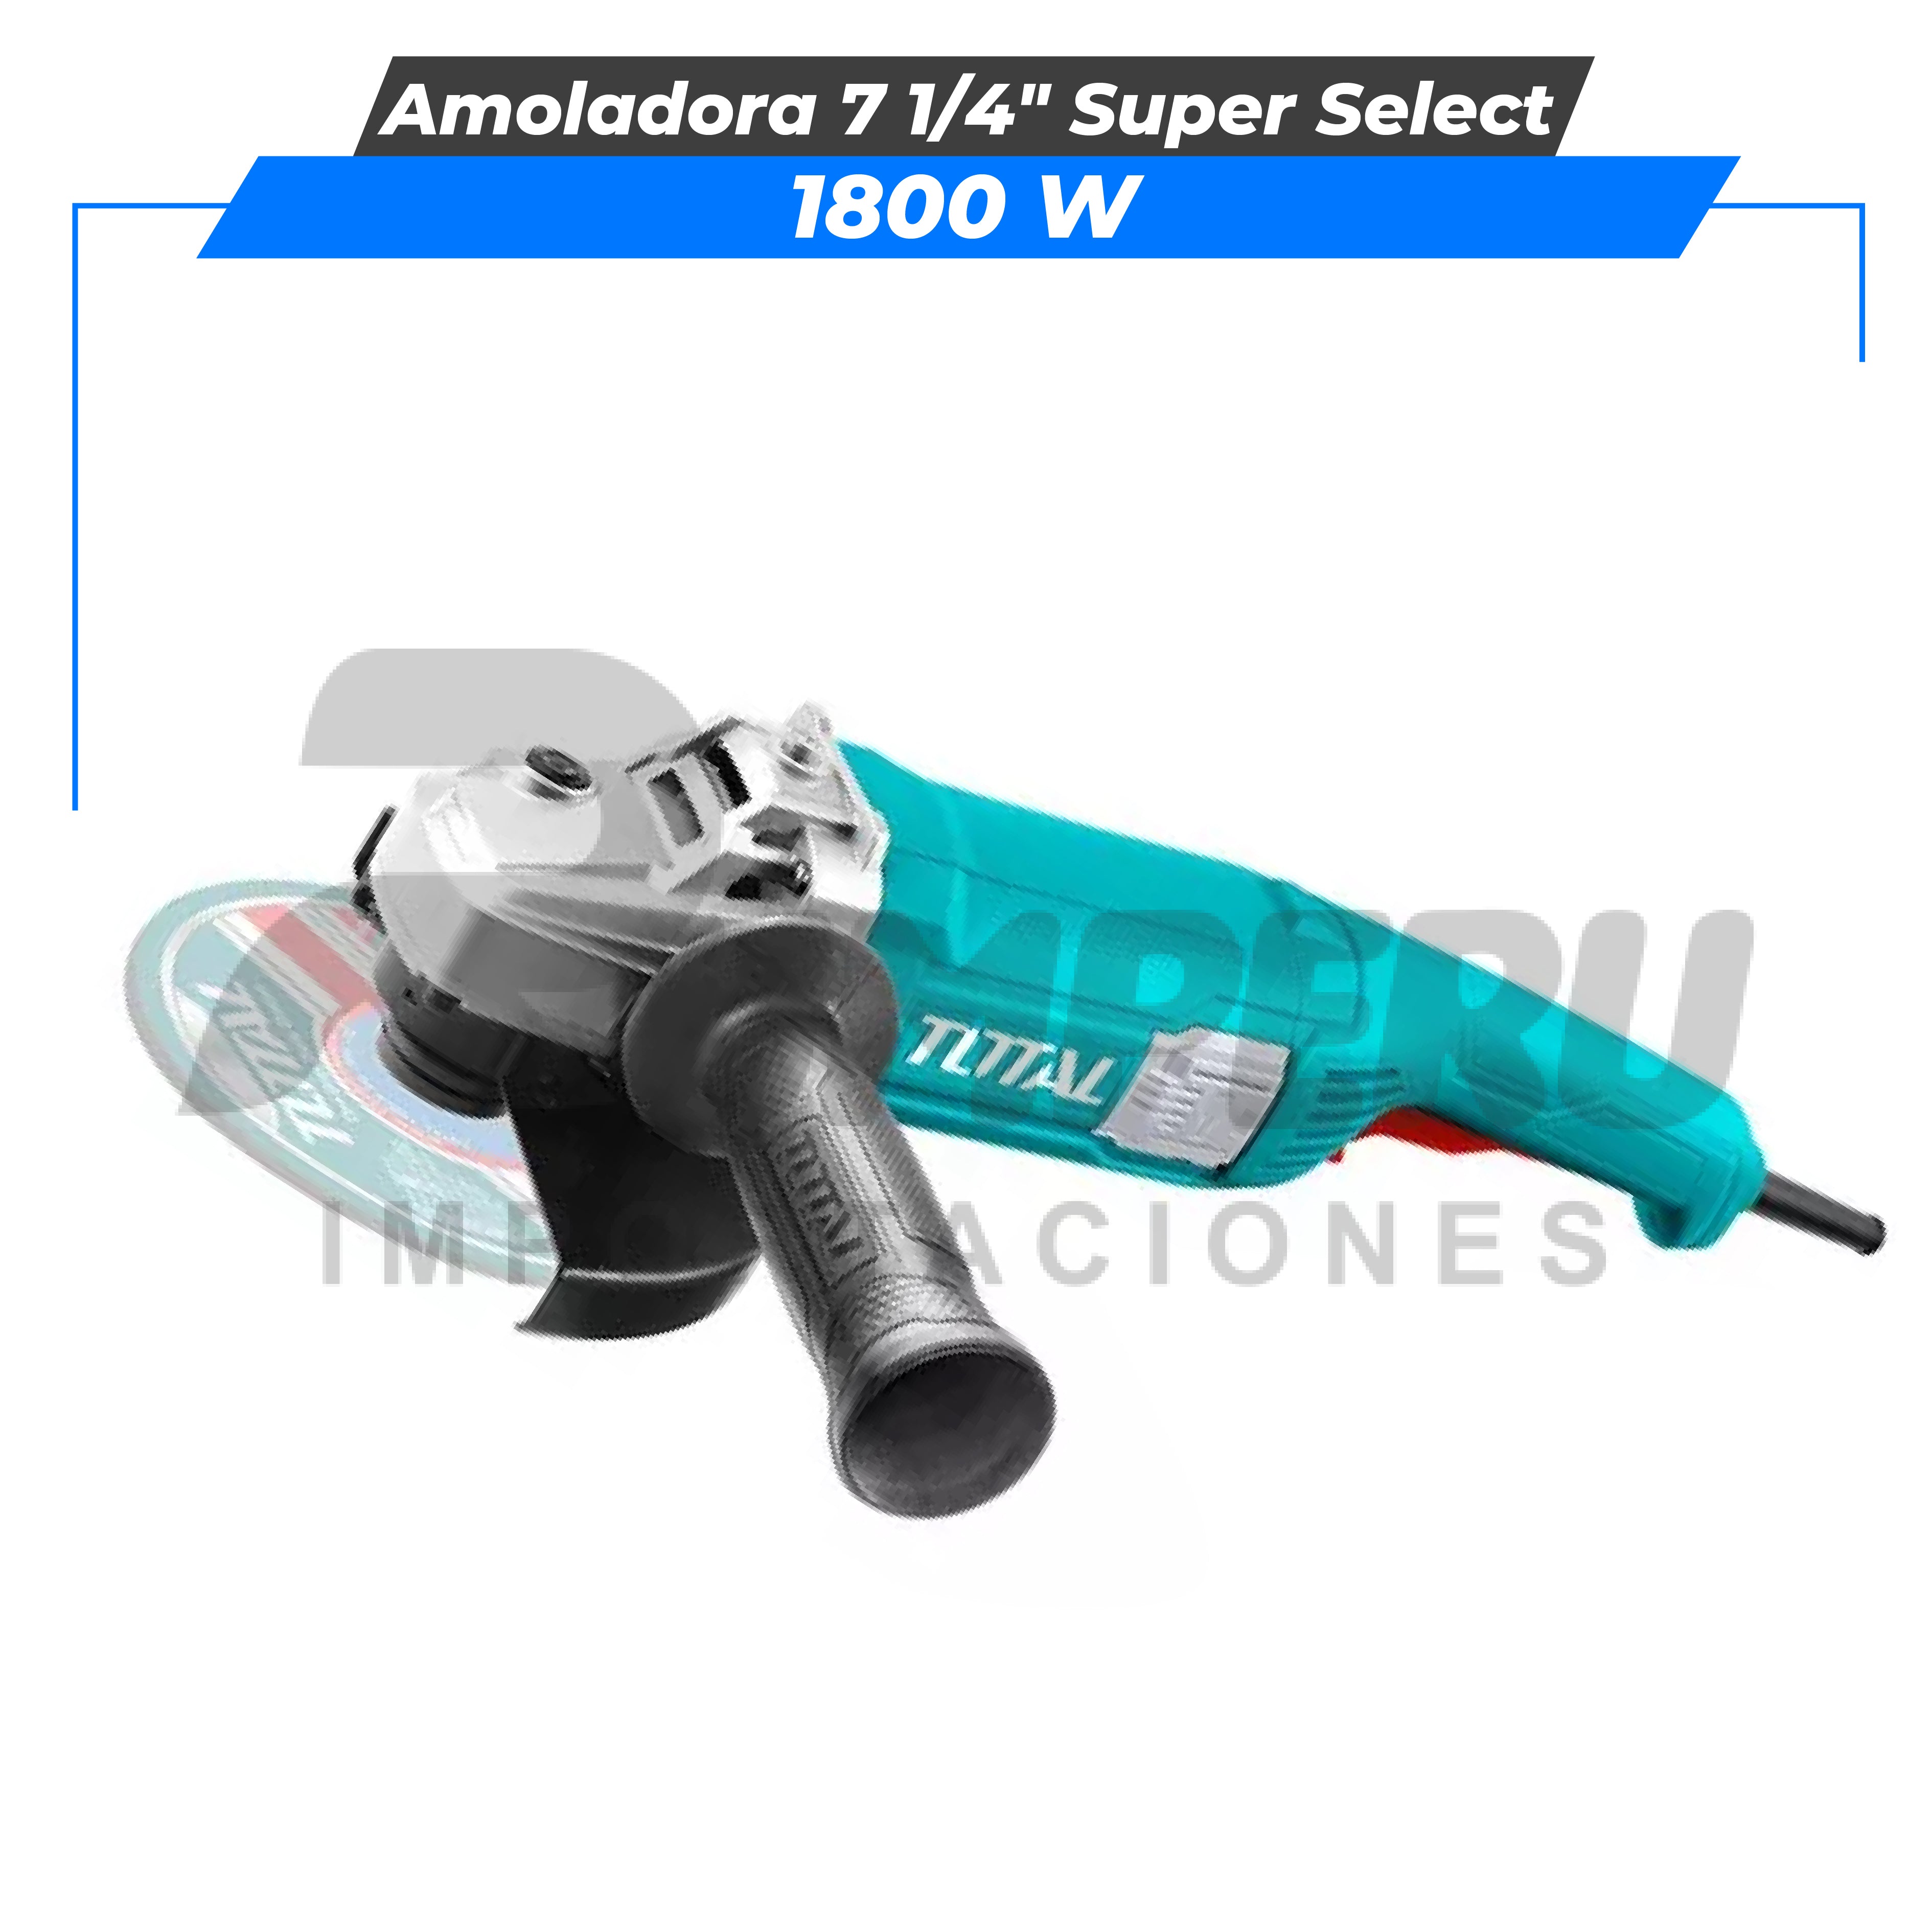 Amoladora 7 1/4" 1800w SUPER SELECT